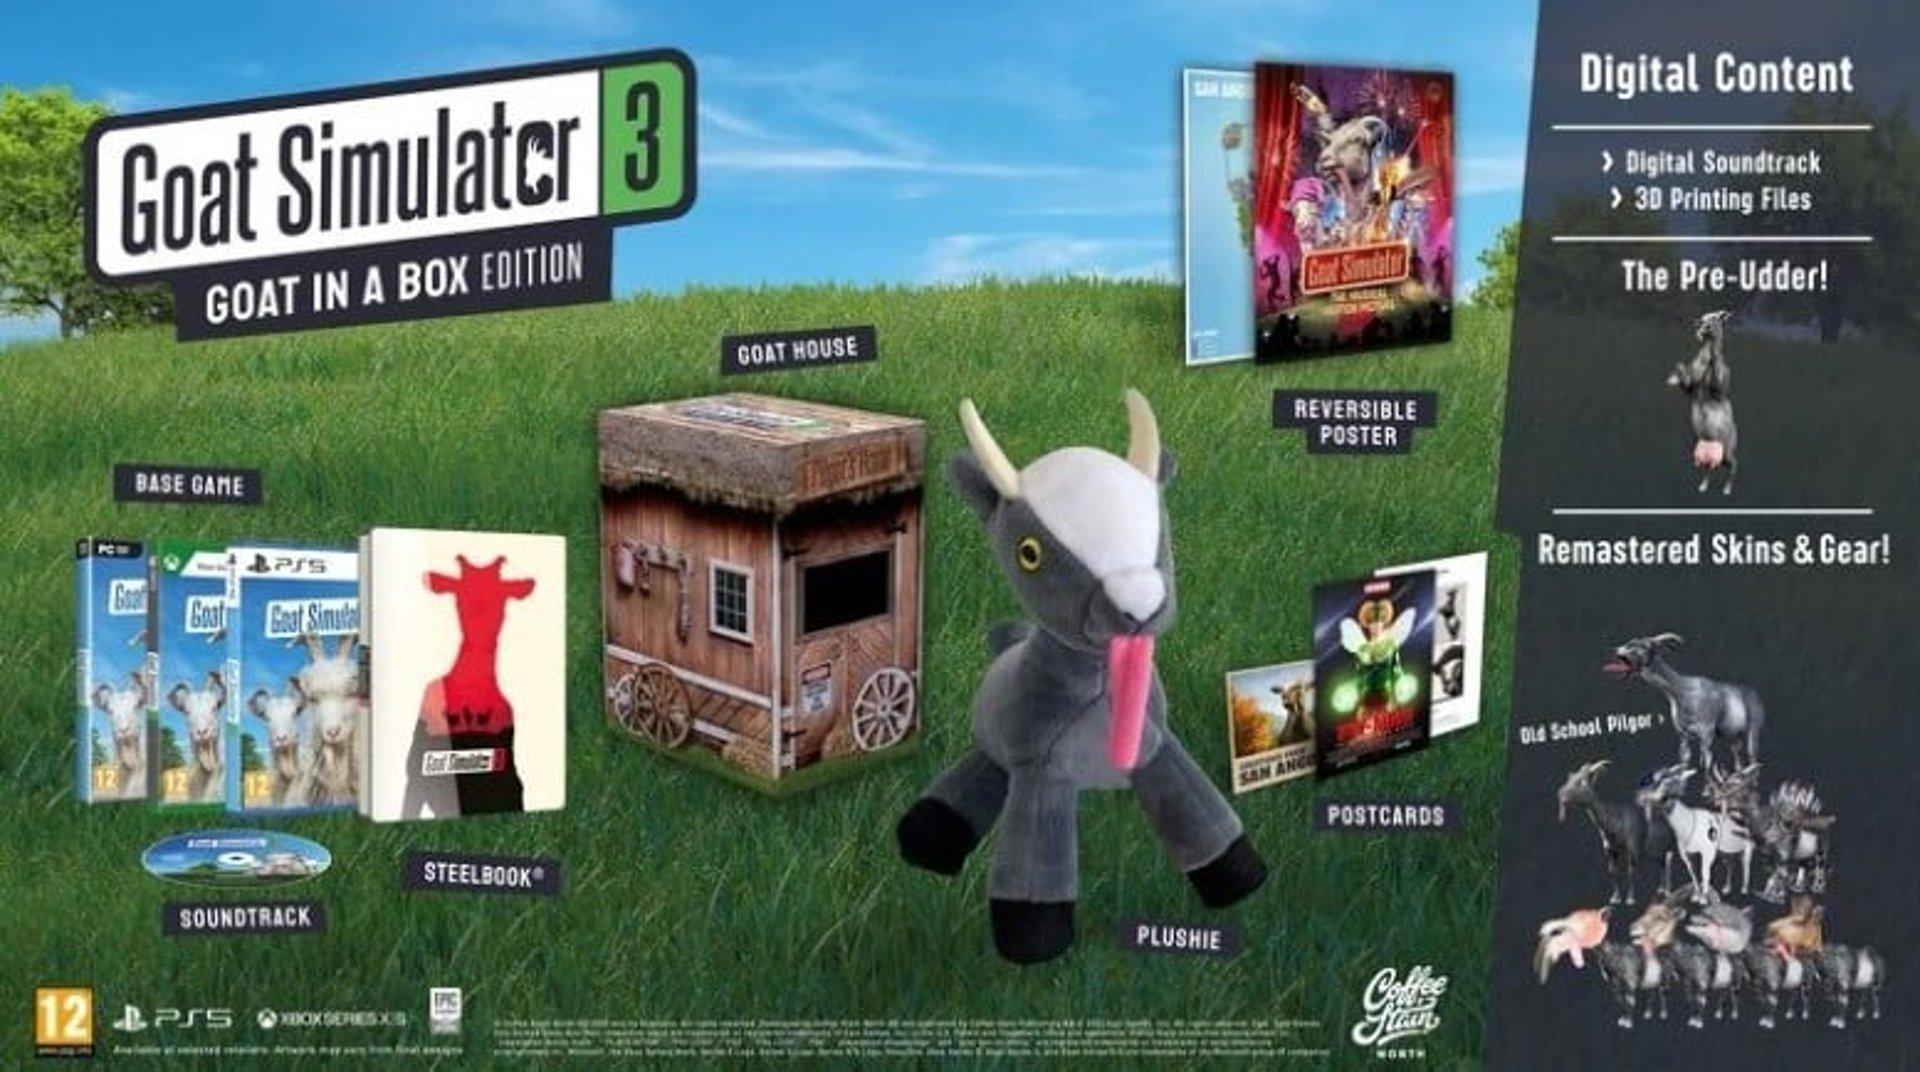 Cheapest Goat Simulator 3: Goat in a Box Edition Key